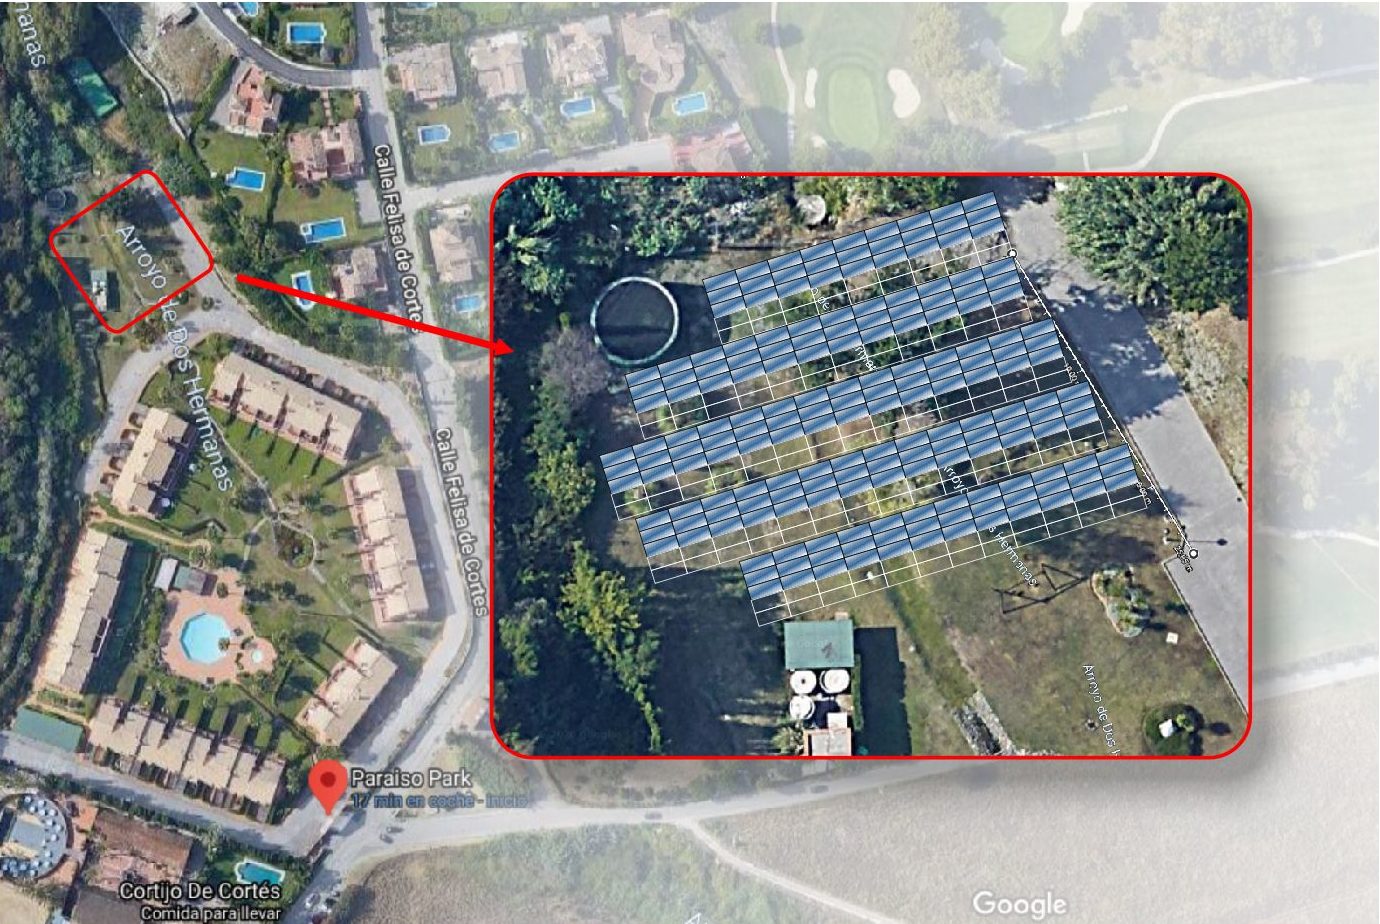 cropped paraisopark layout - placas solares malaga